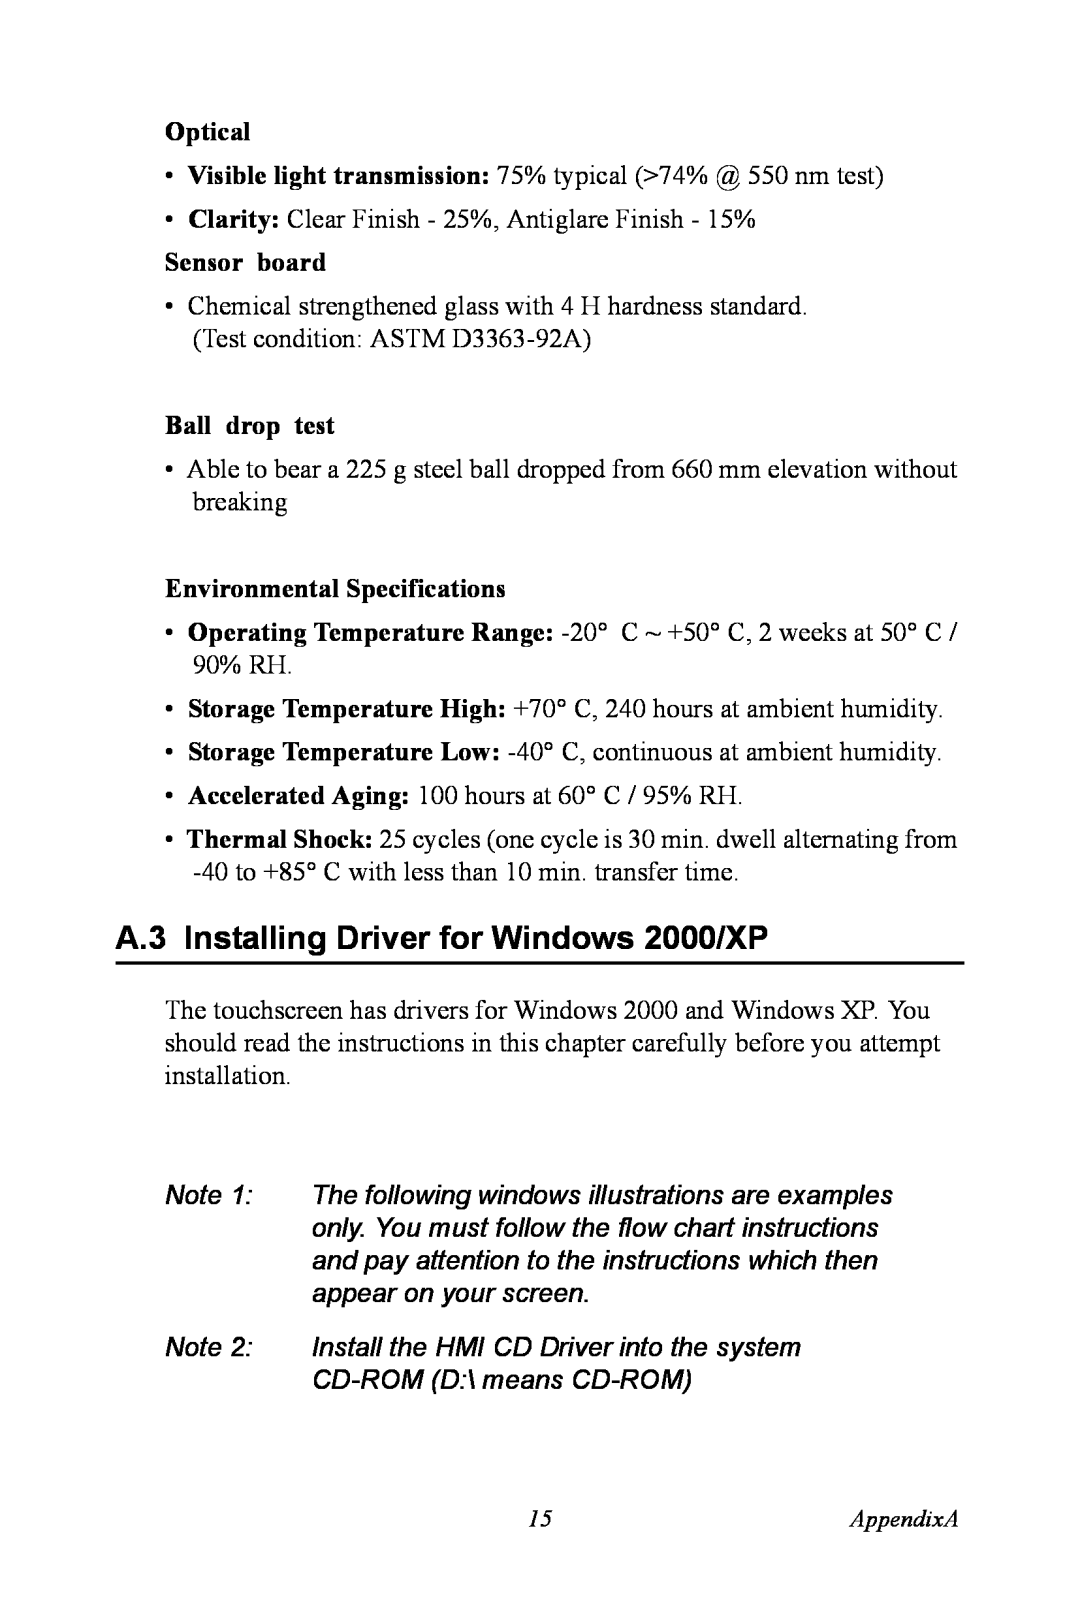 Advantech FPM-3150 Series user manual A.3 Installing Driver for Windows 2000/XP, Optical, Sensor board, Ball drop test 